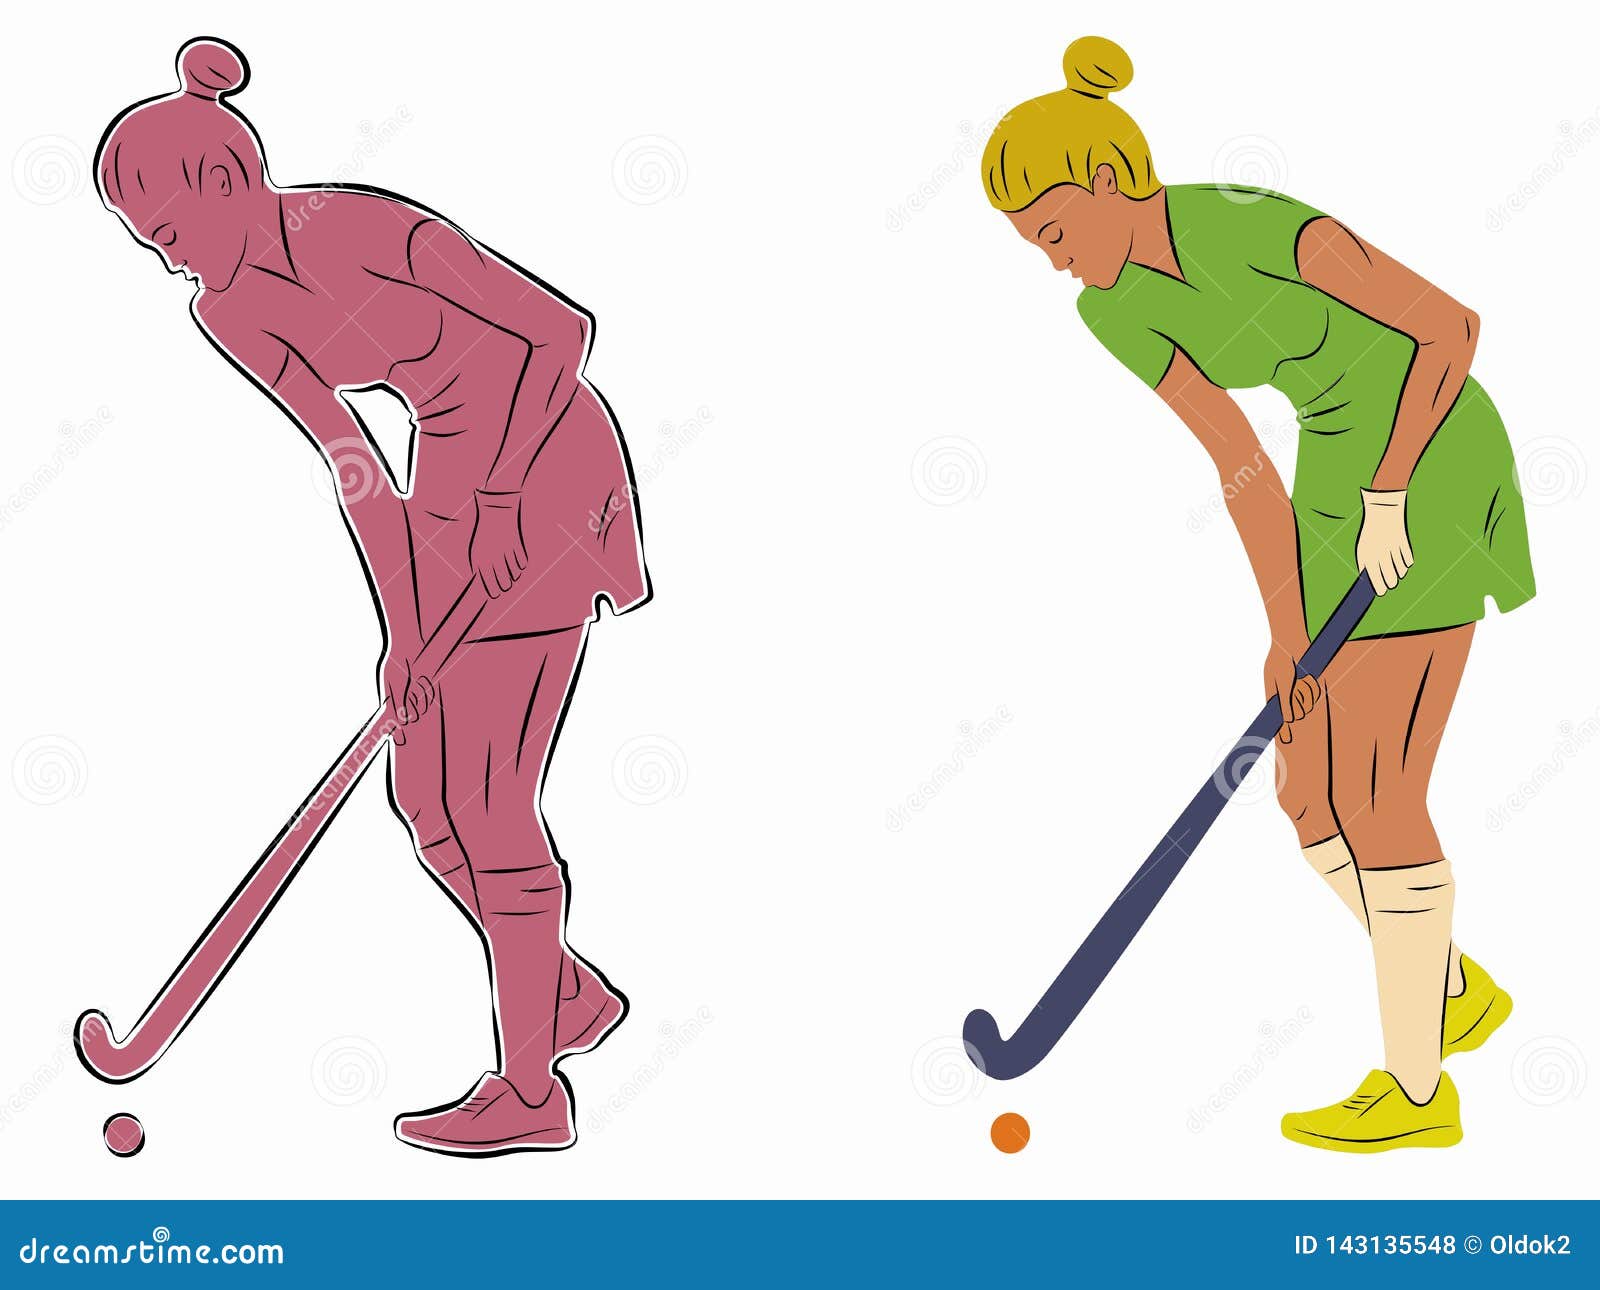 Illustration Ice Hockey Player, Vector Draw Stock Vector - Illustration of  goal, champion: 121806872